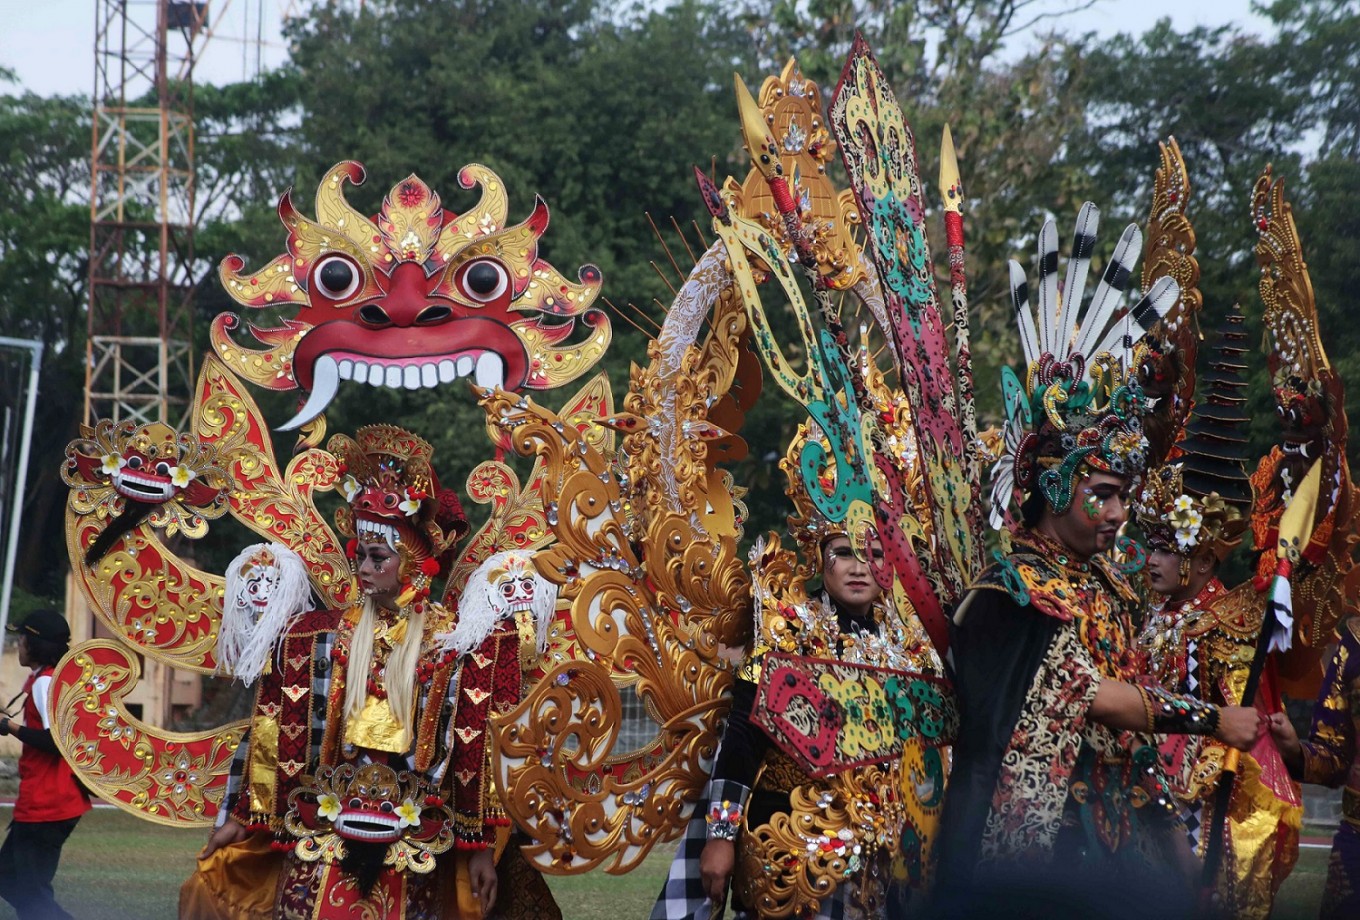  Solo  Batik  Carnival highlights diversity creativity Art 